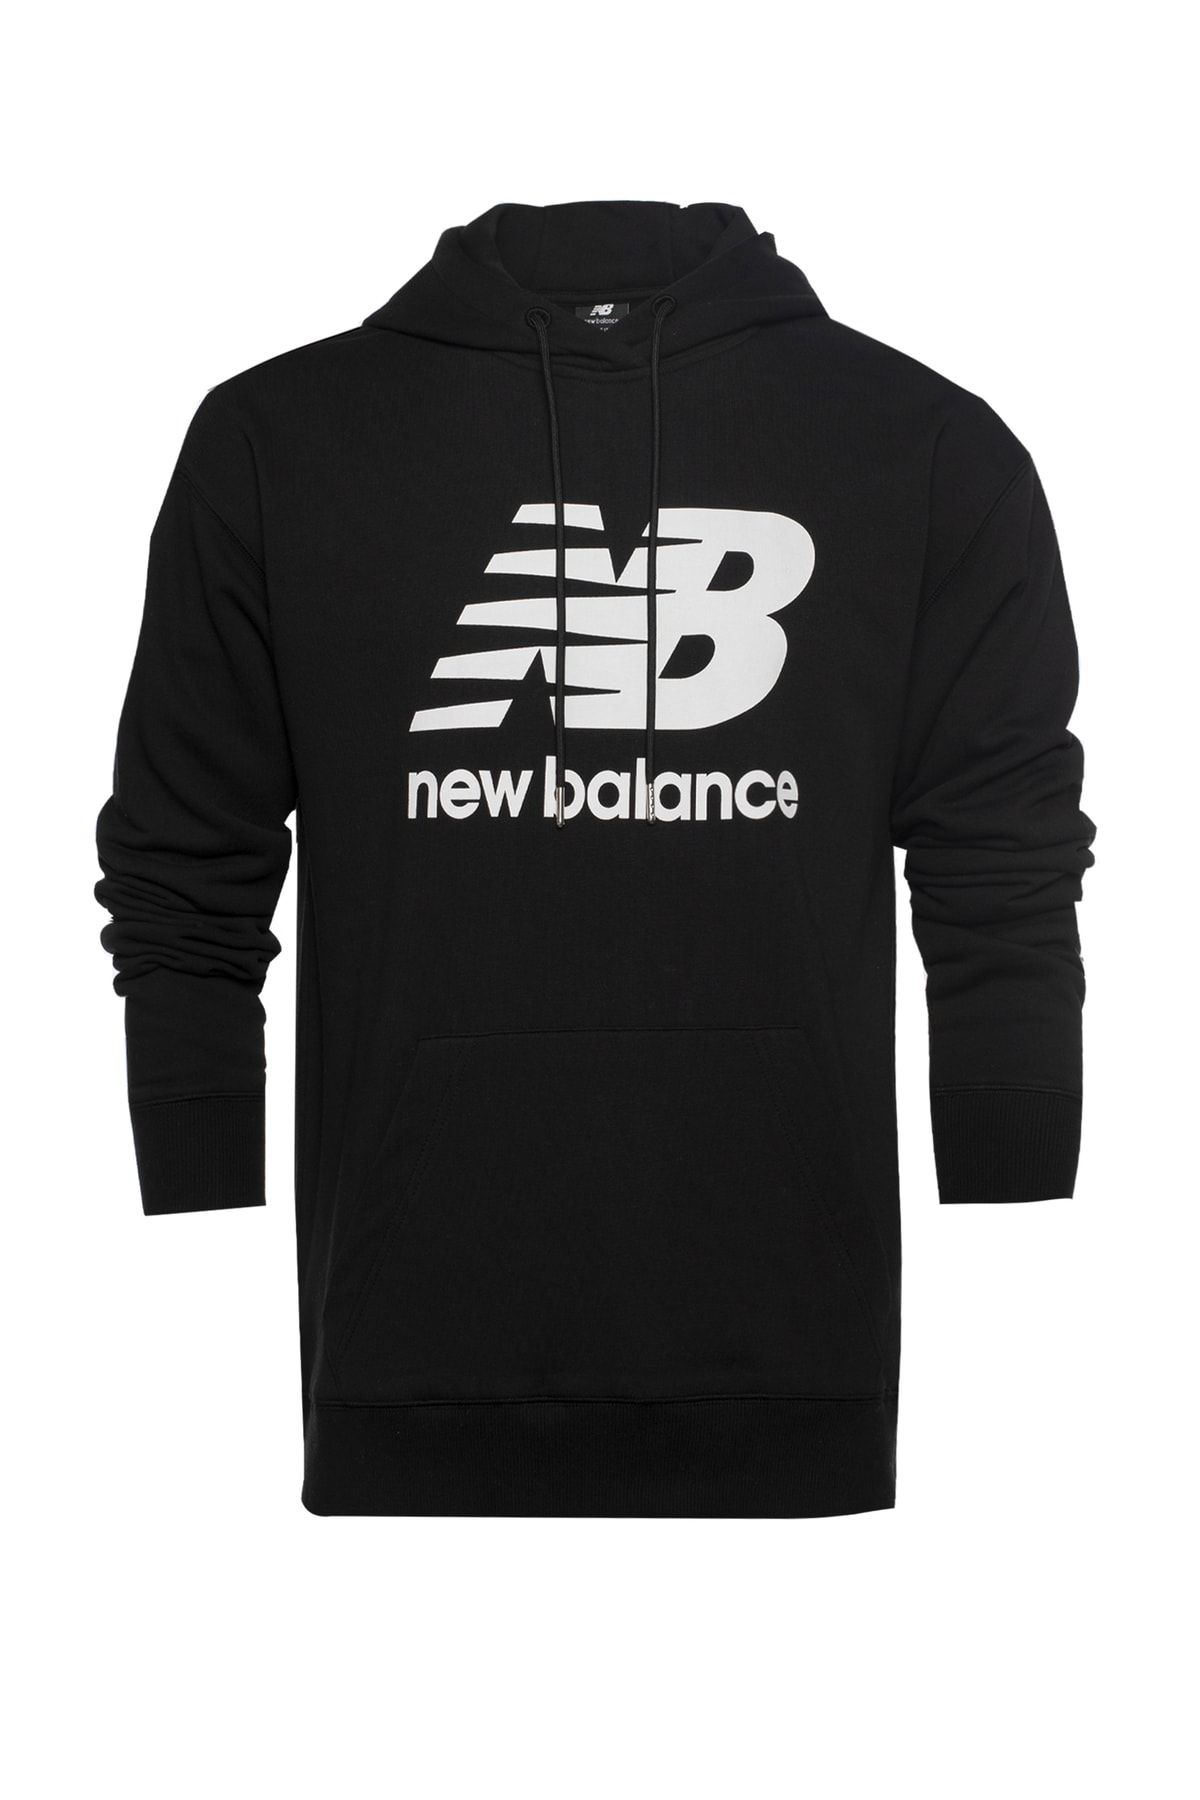 New Balance Nb Lifestyle Unisex Hoodie Unisex Siyah Sweatshirt Unh3219-bk